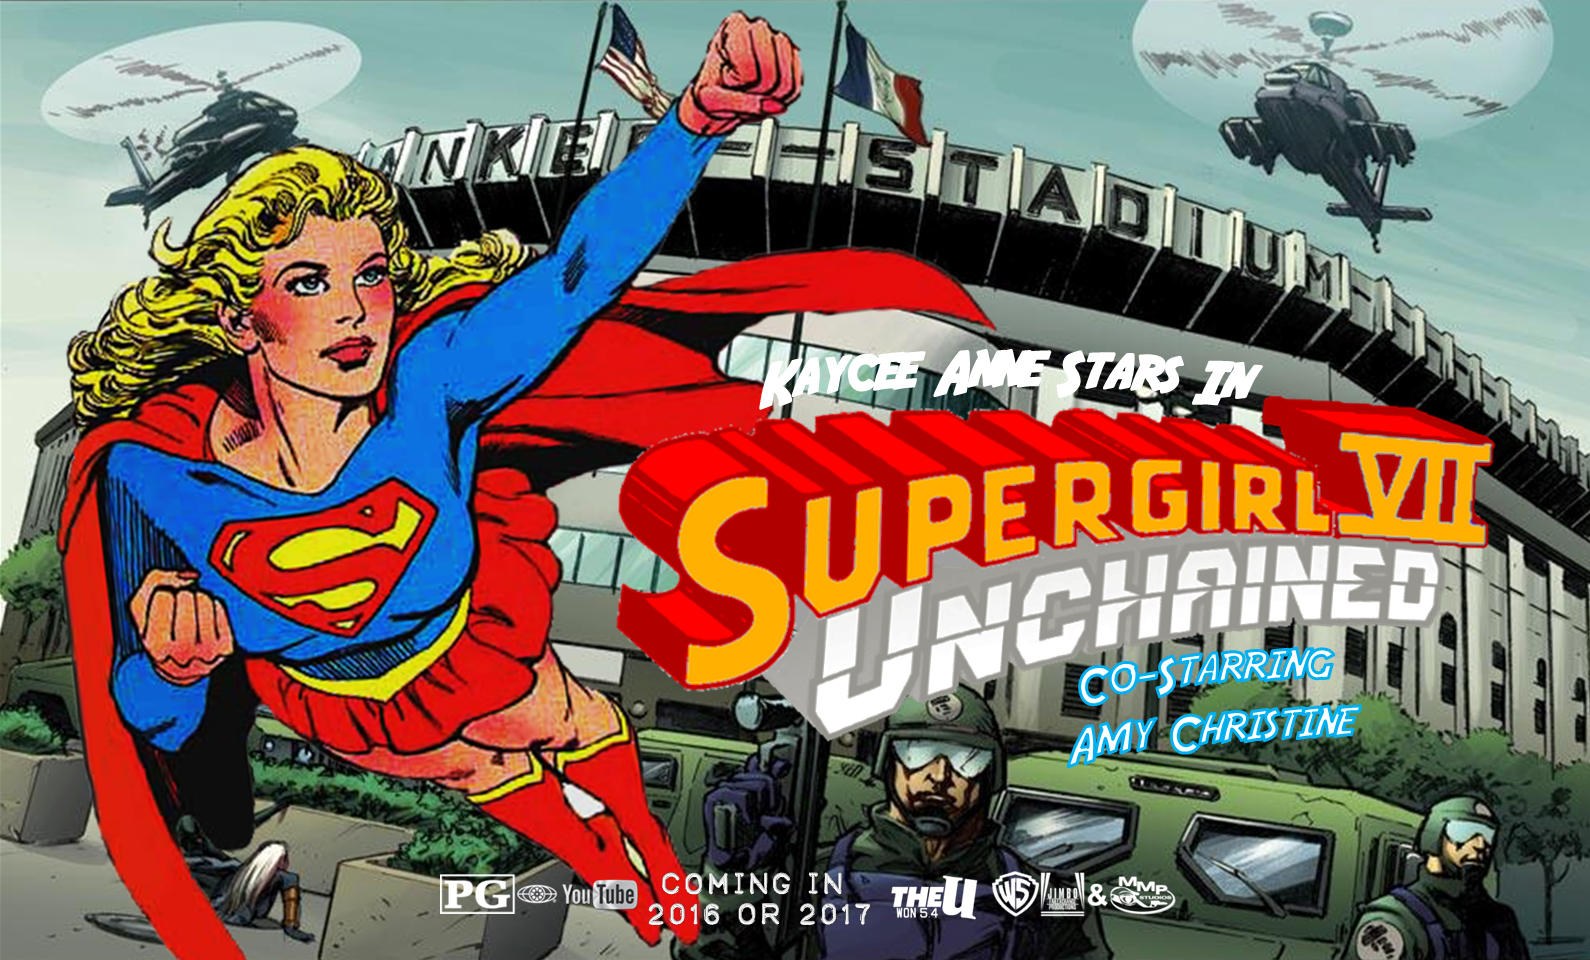 supergirl7yankeestadiumposter.png